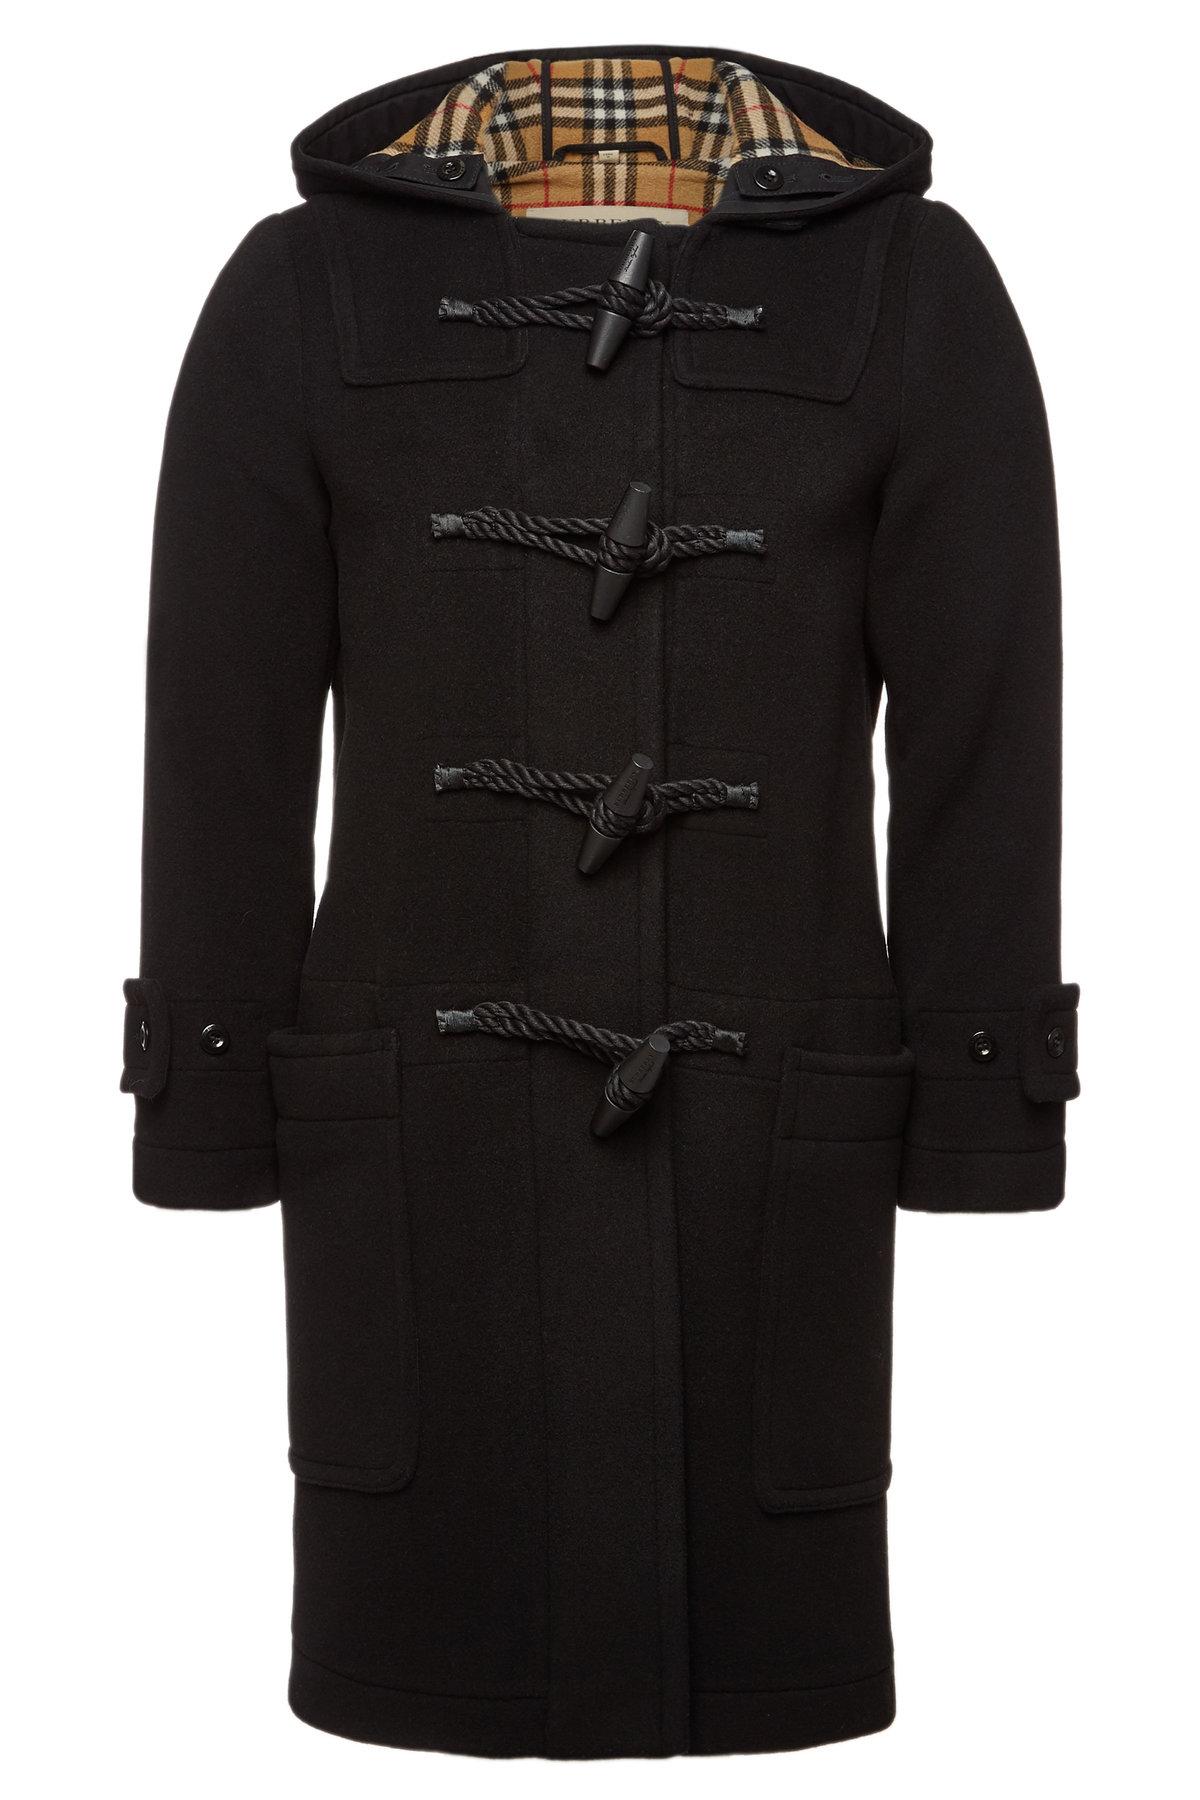 Burberry Wool Duffle Coat in Black for Men - Lyst